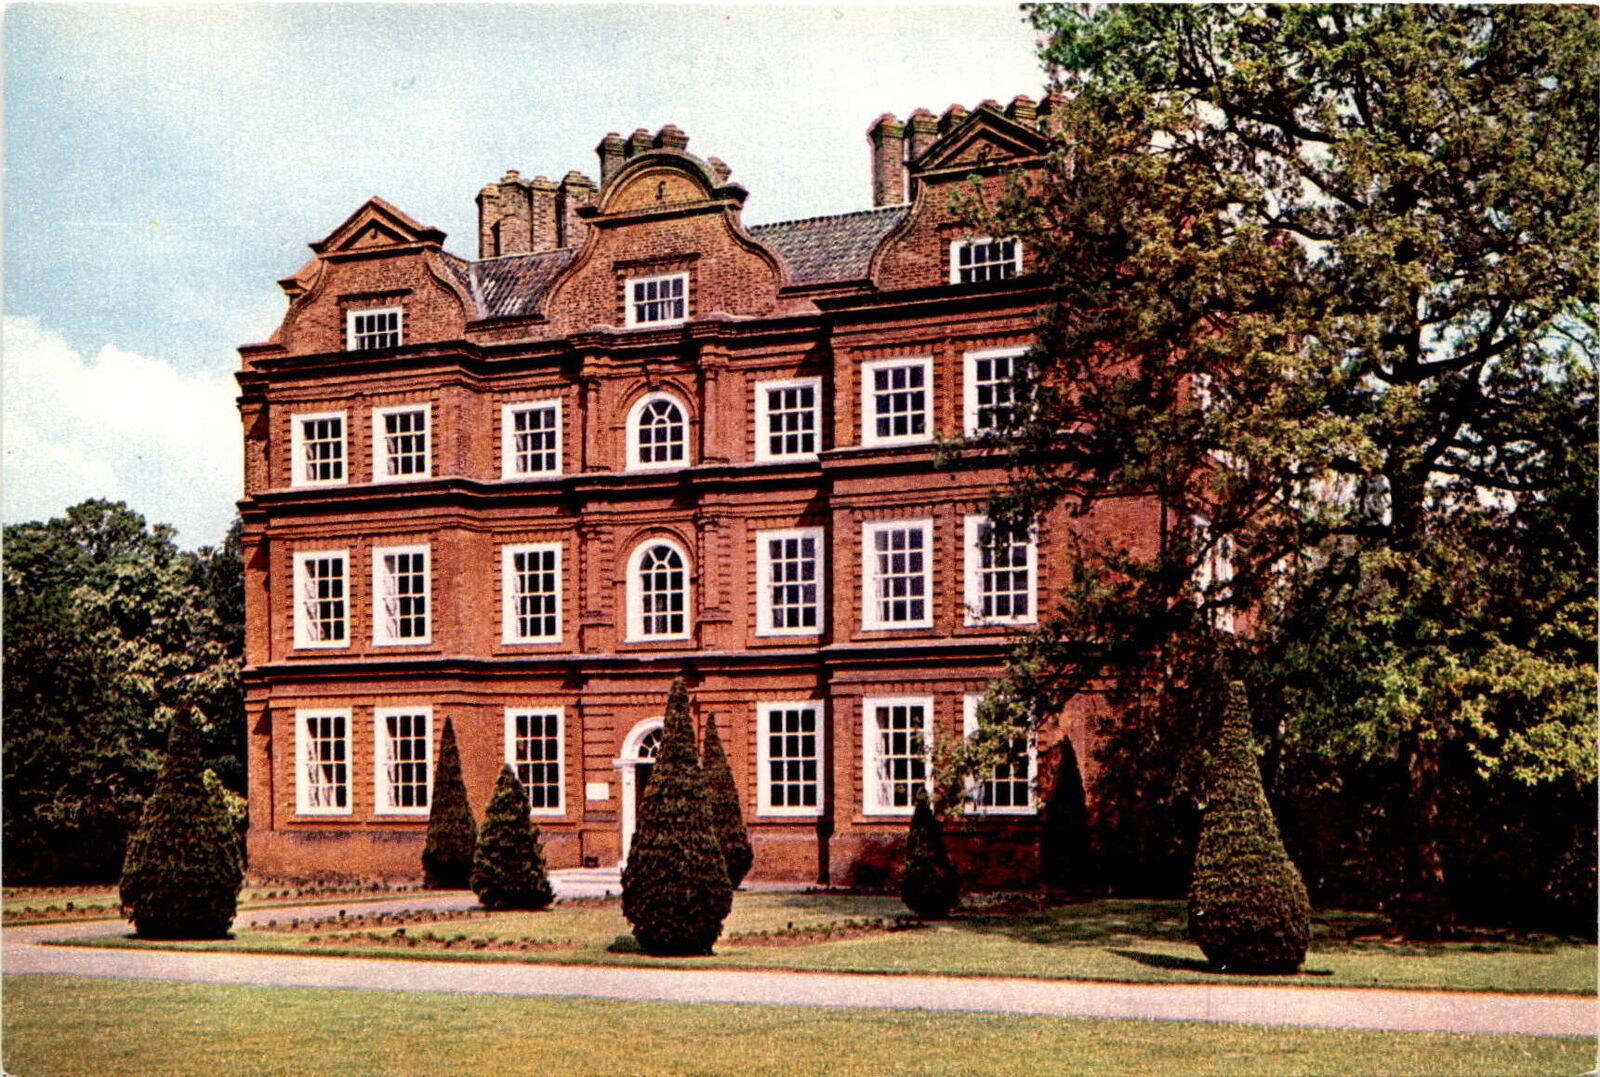 Royal Botanic Gardens, Kew, London, England, Kew Palace, Dutch House, Postcard